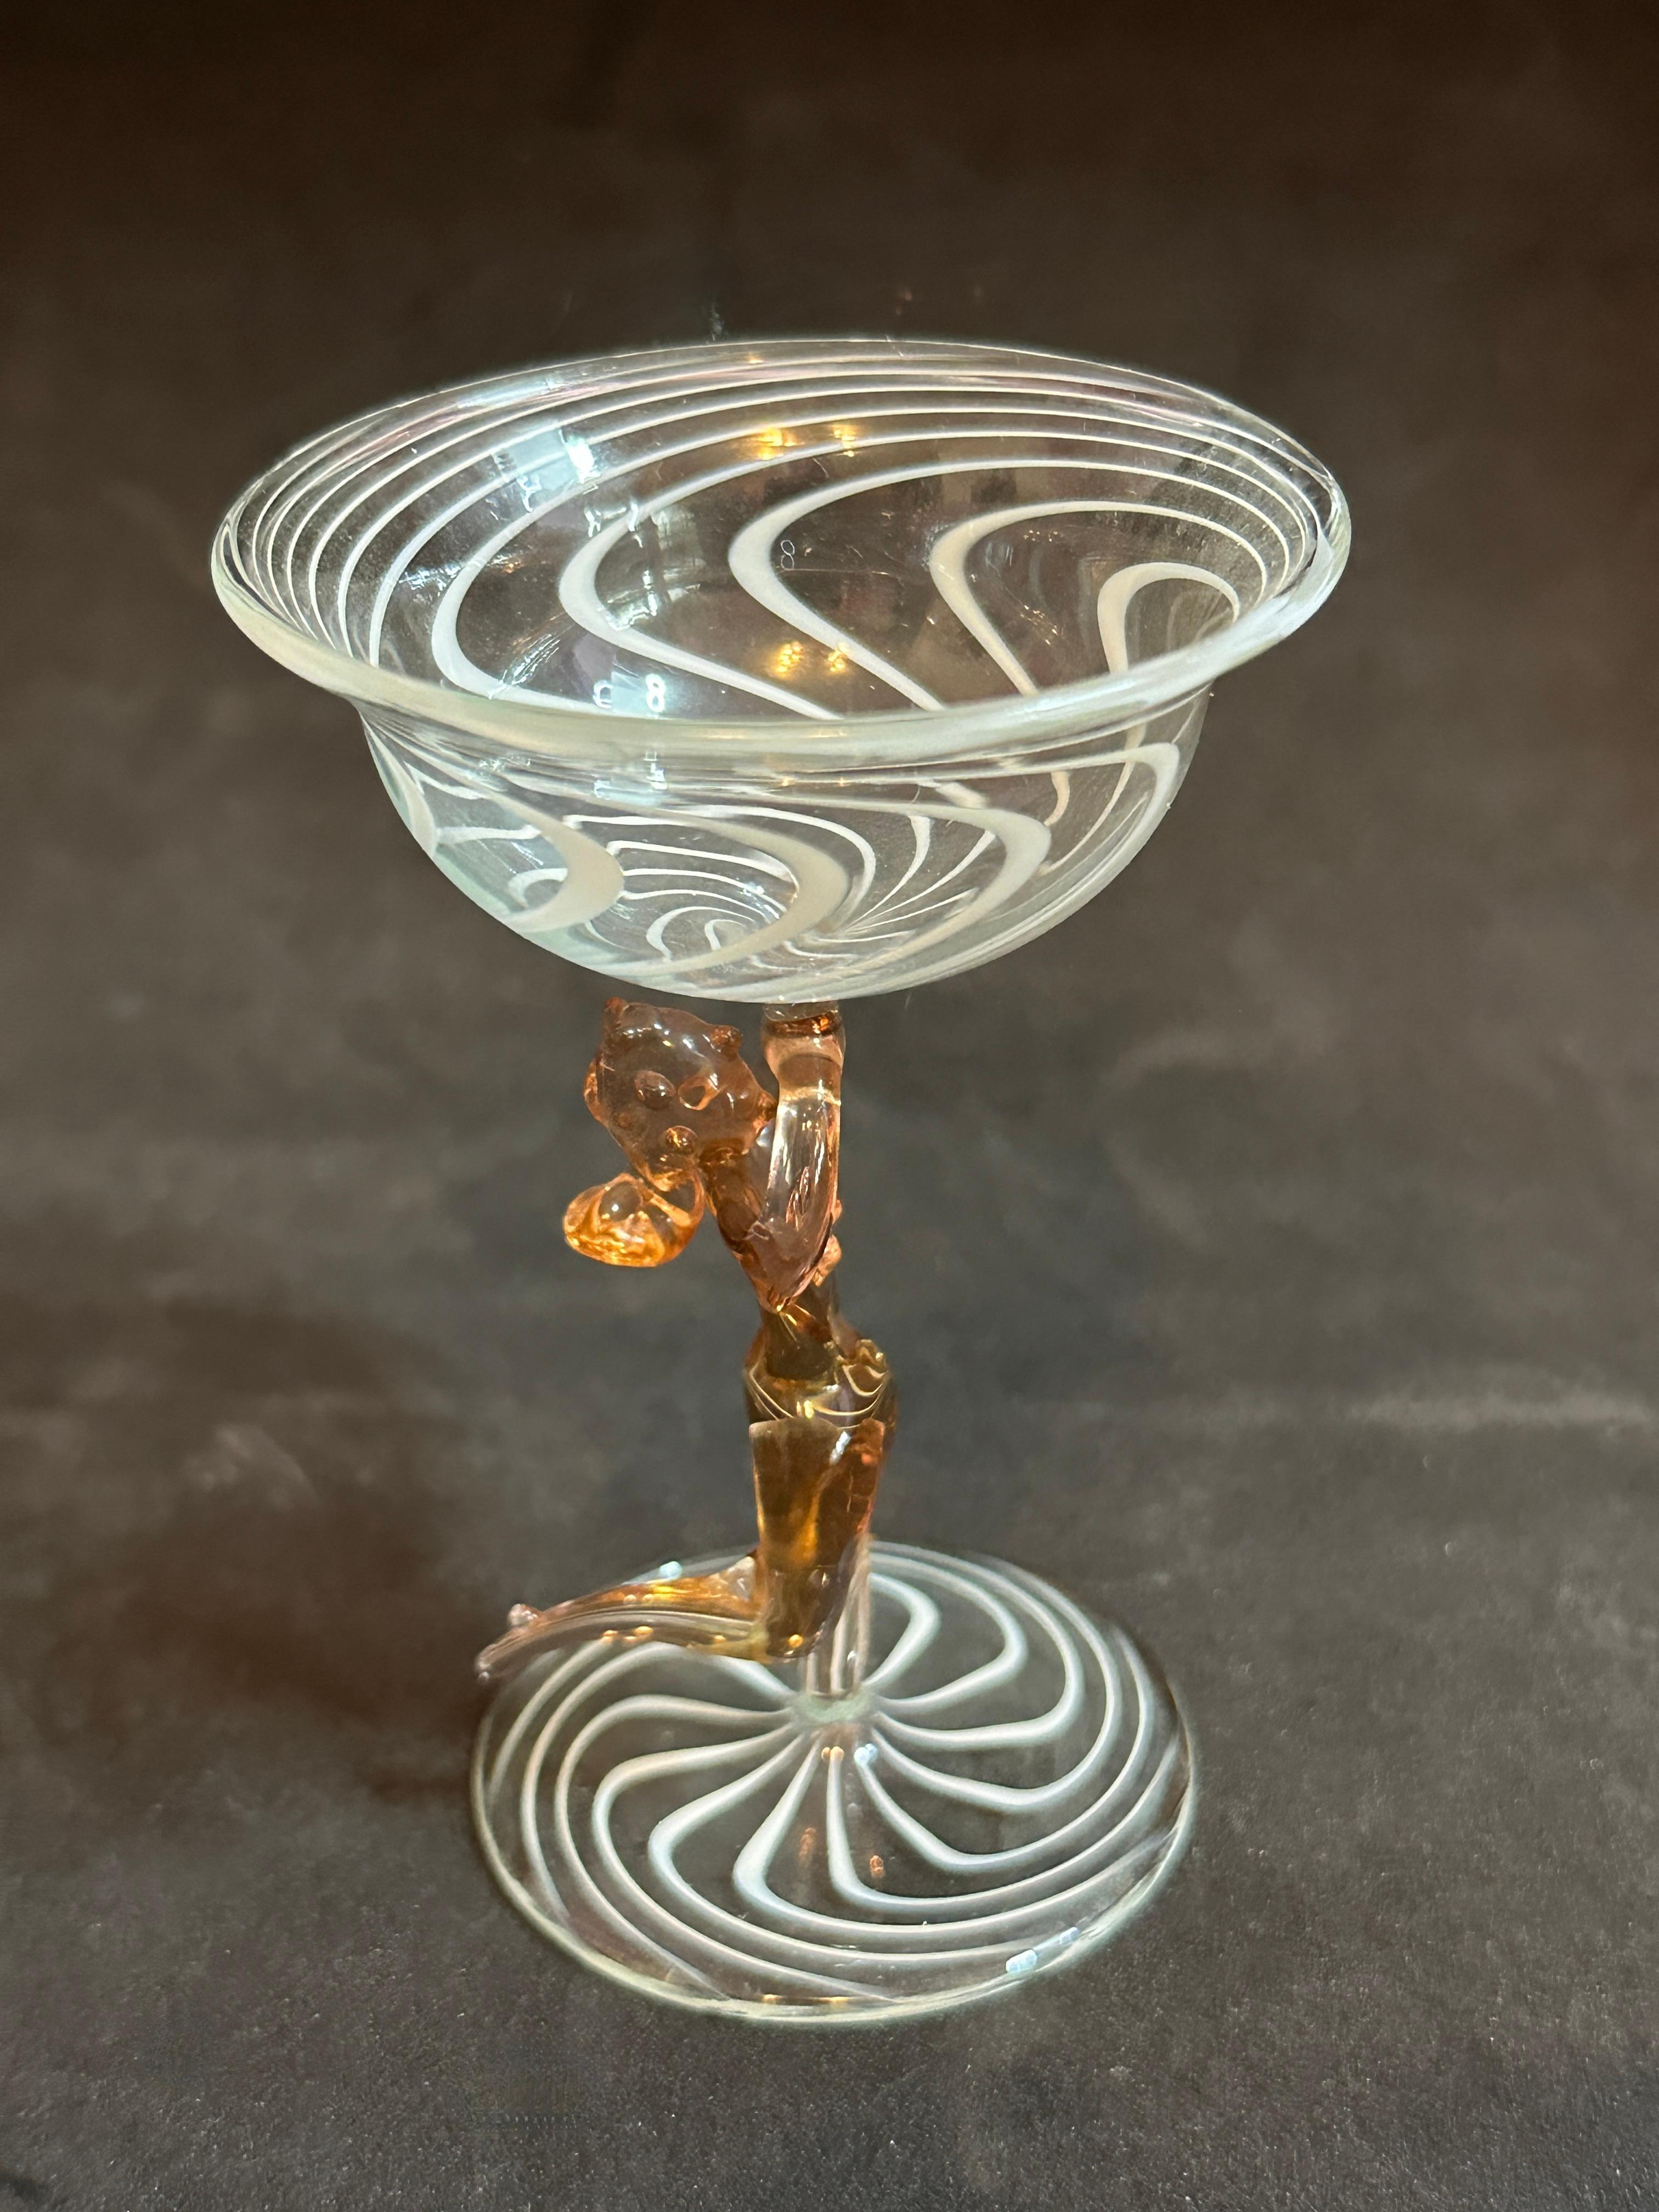 Hand-Crafted Beautiful Stemware Cocktail Glass, Nude Lady Stem, Bimini Art Vintage Austria For Sale